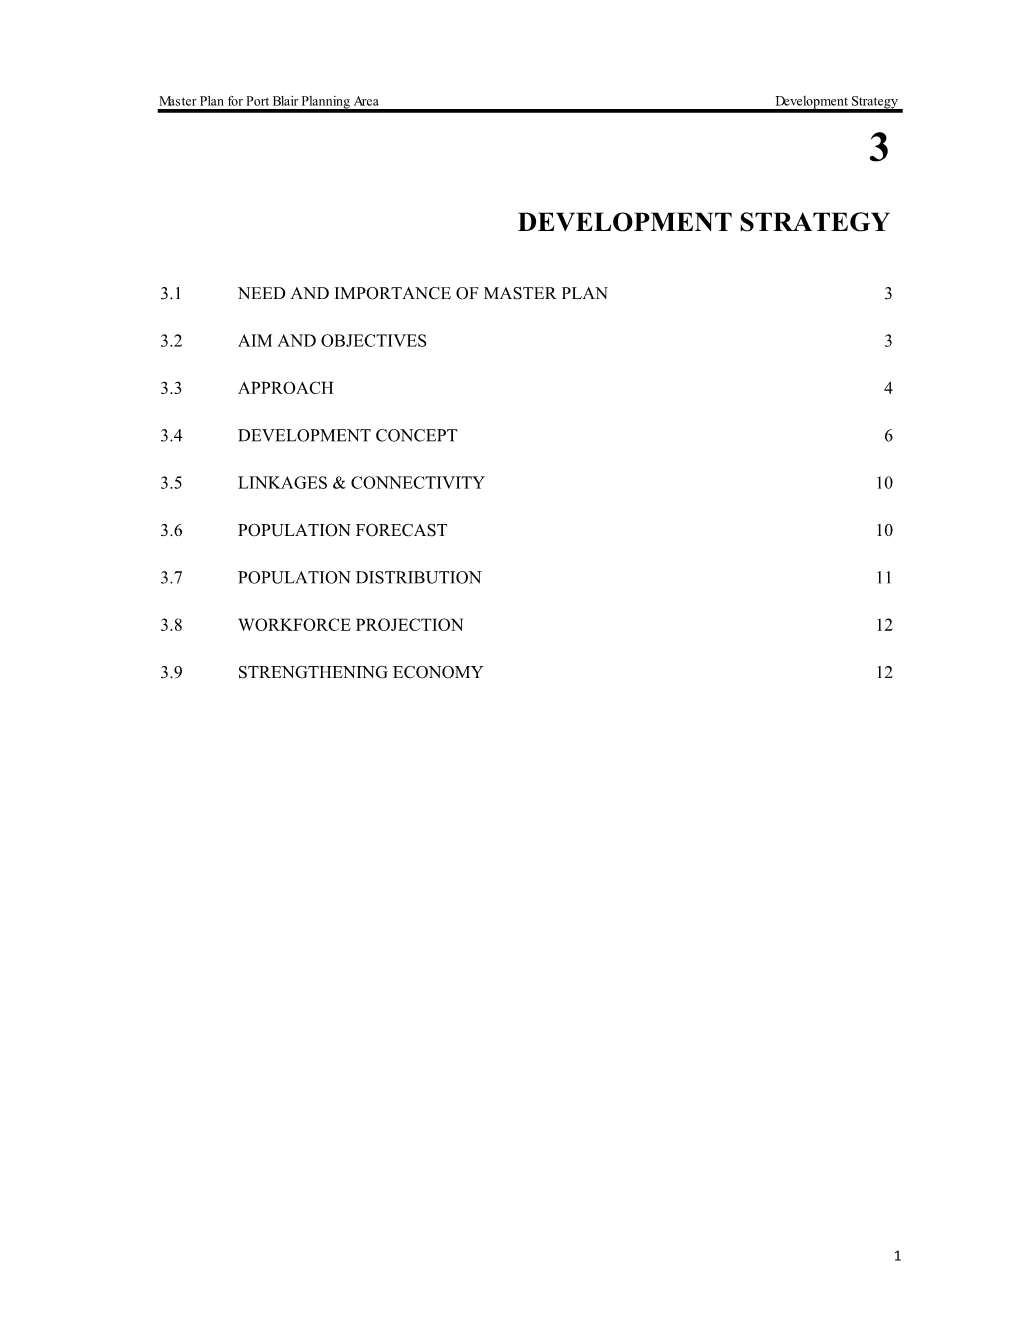 Development Strategy 3